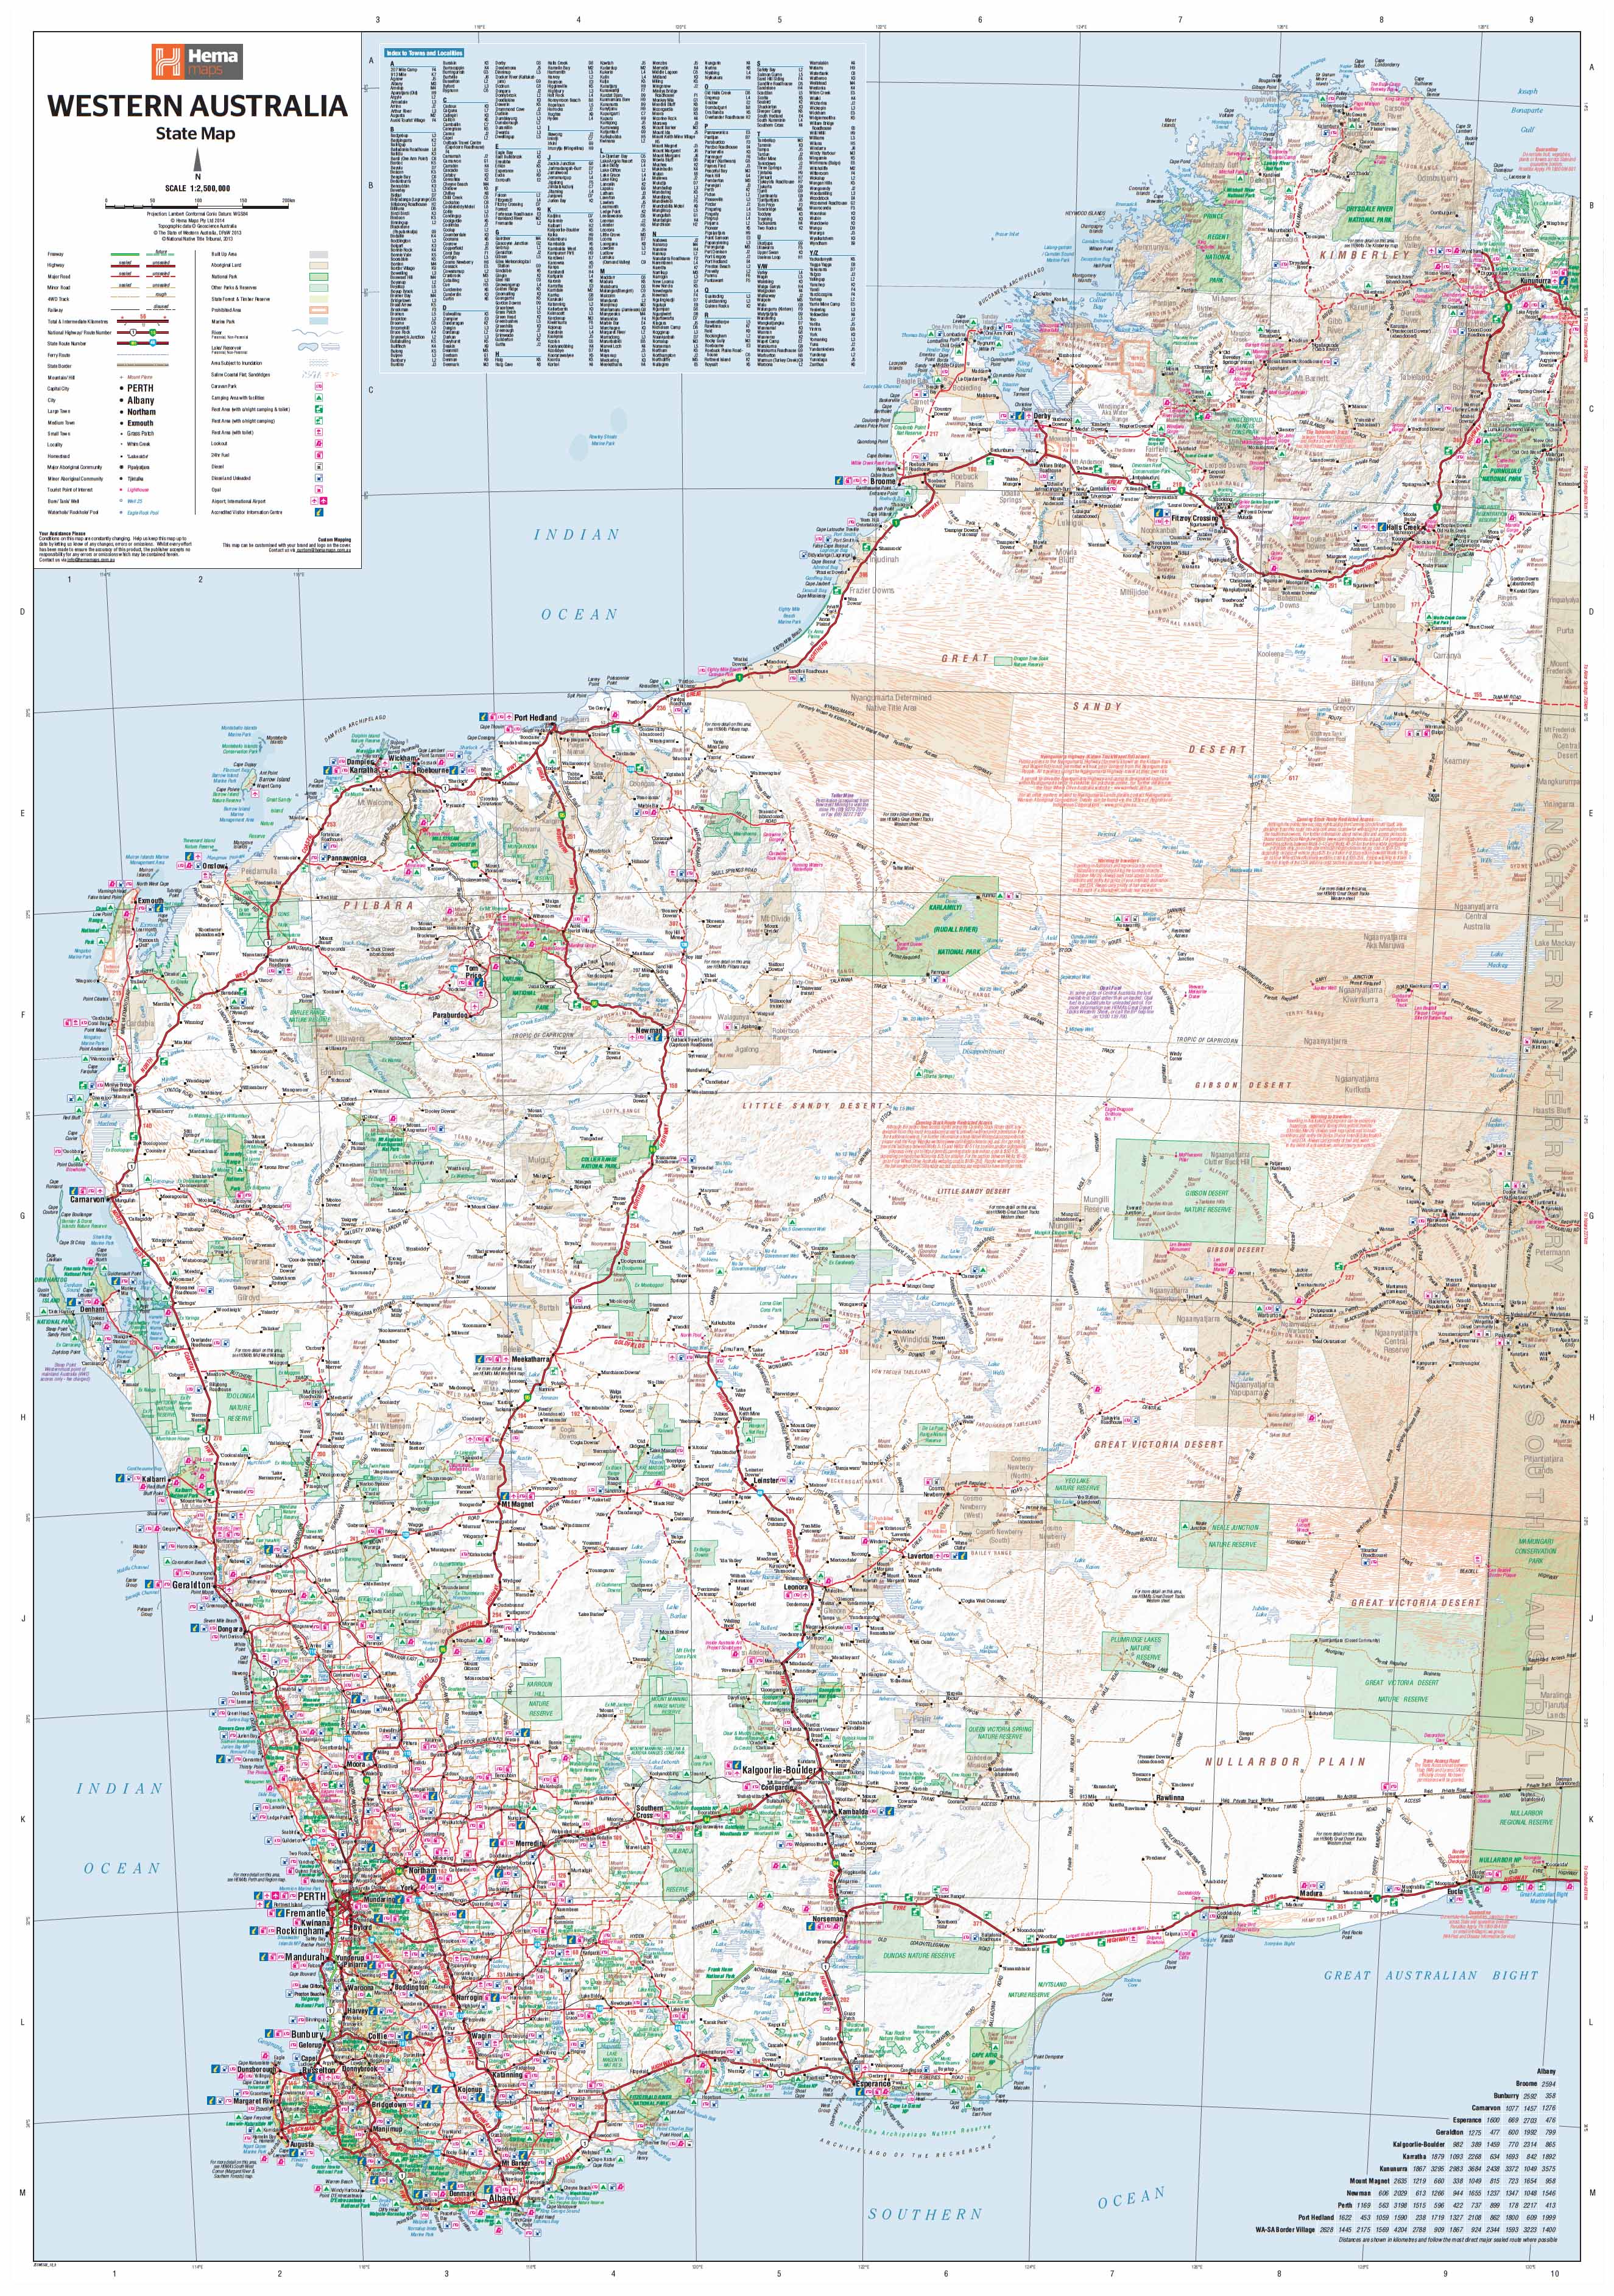 Western Australia Hema Map 3112d577 Dd1e 4f6b 9064 5bcfb6248dcc ?v=1584076175